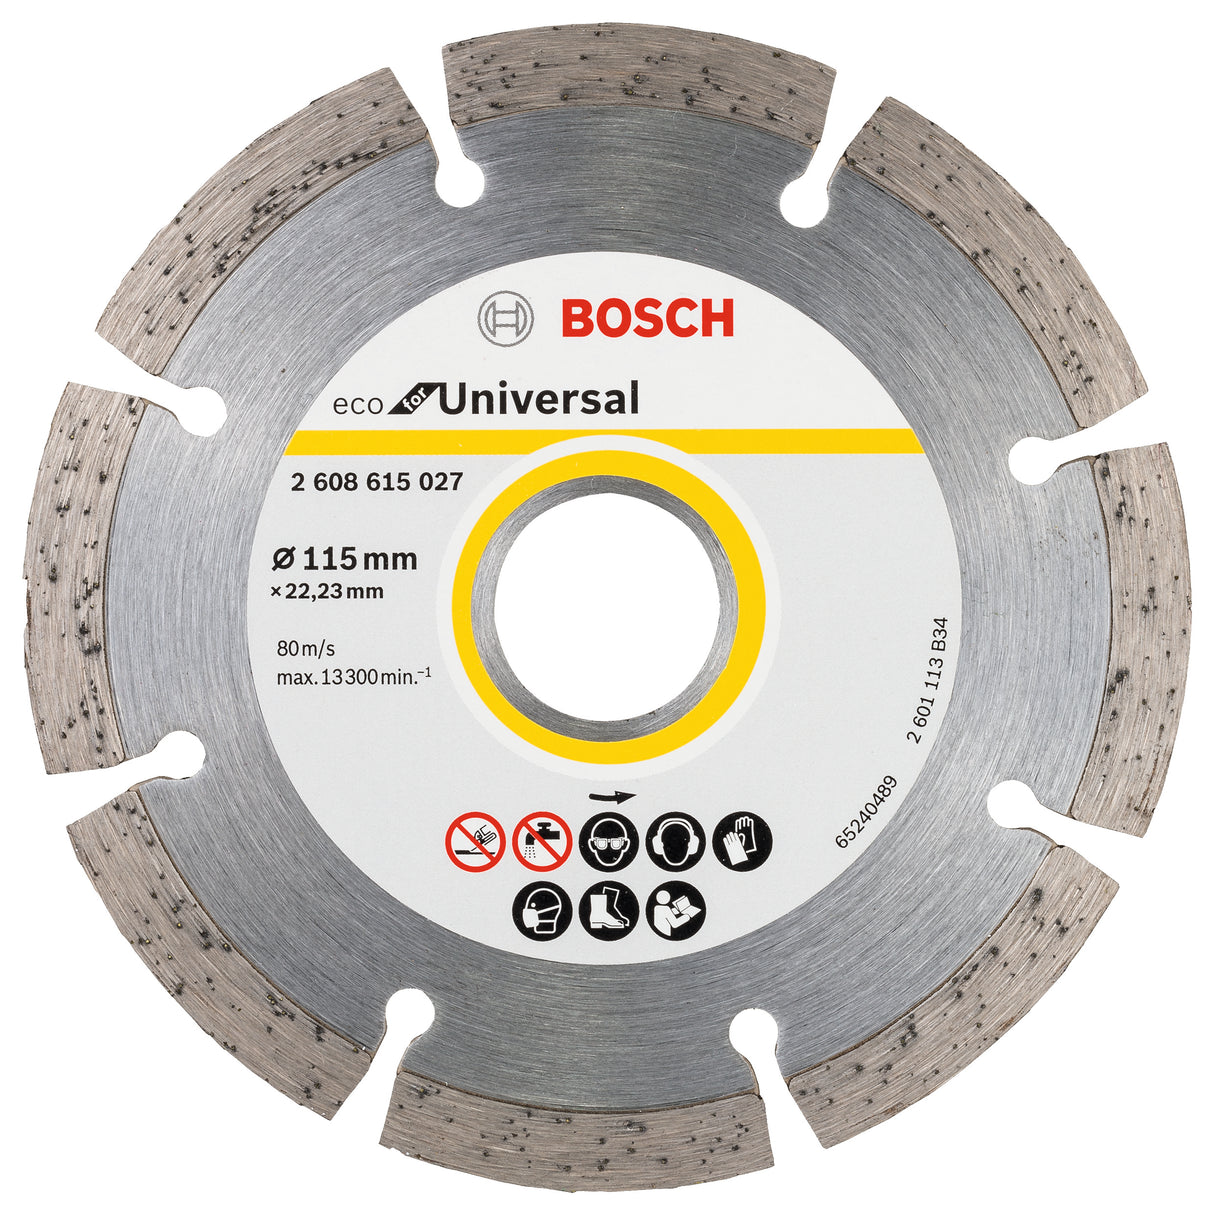 Bosch Professional Diamond Cutting Disc ECO - Universal, 115x22.23x2.0x7mm